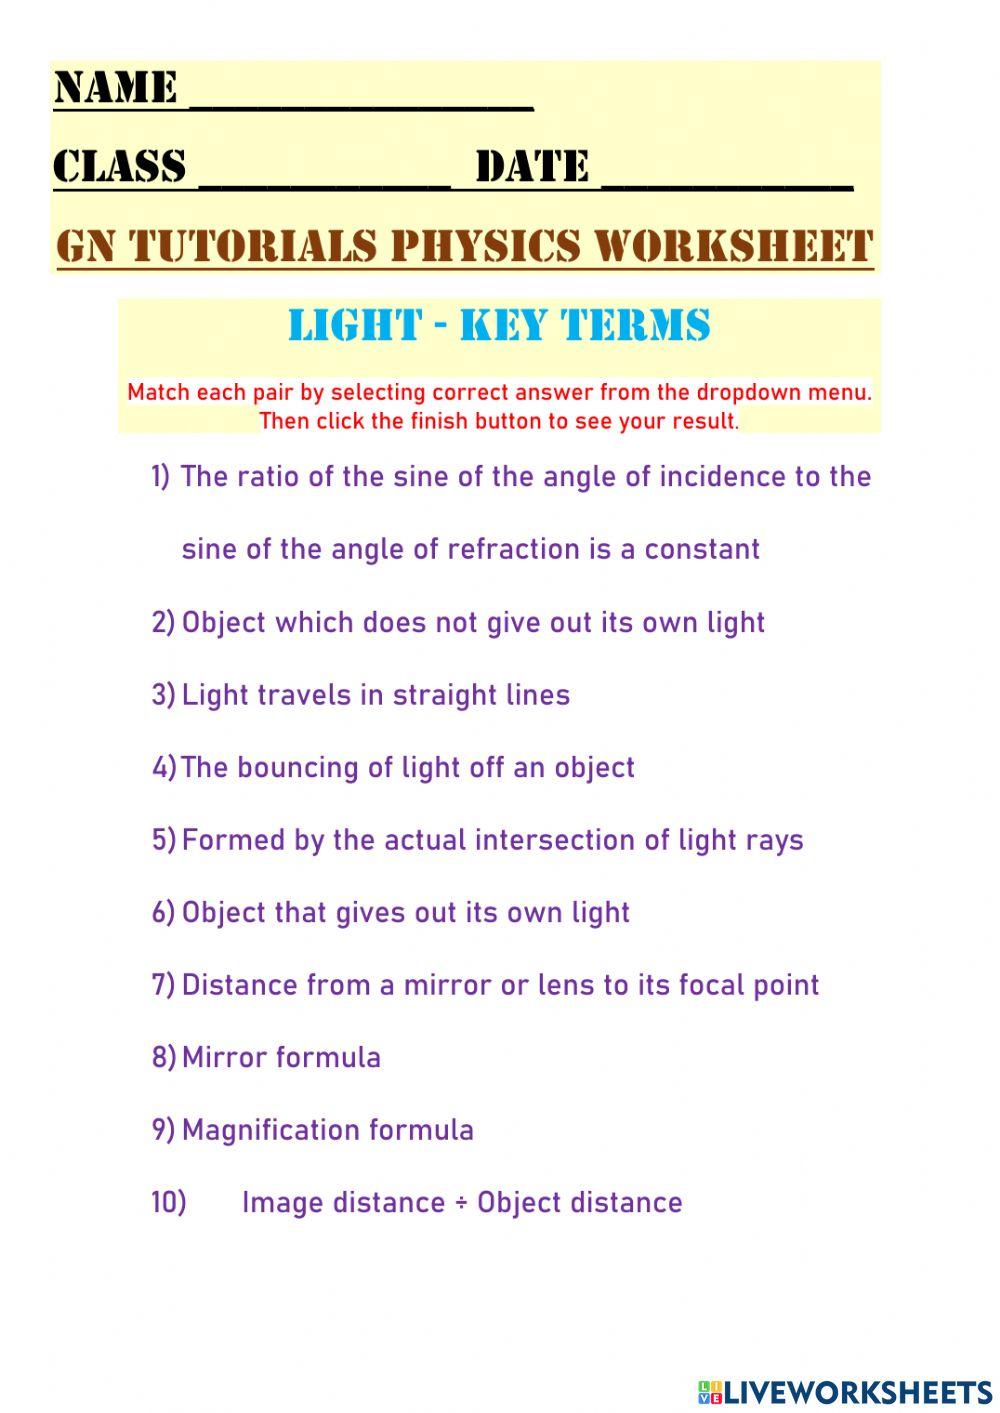 Gn tutorials     physics worksheet on light